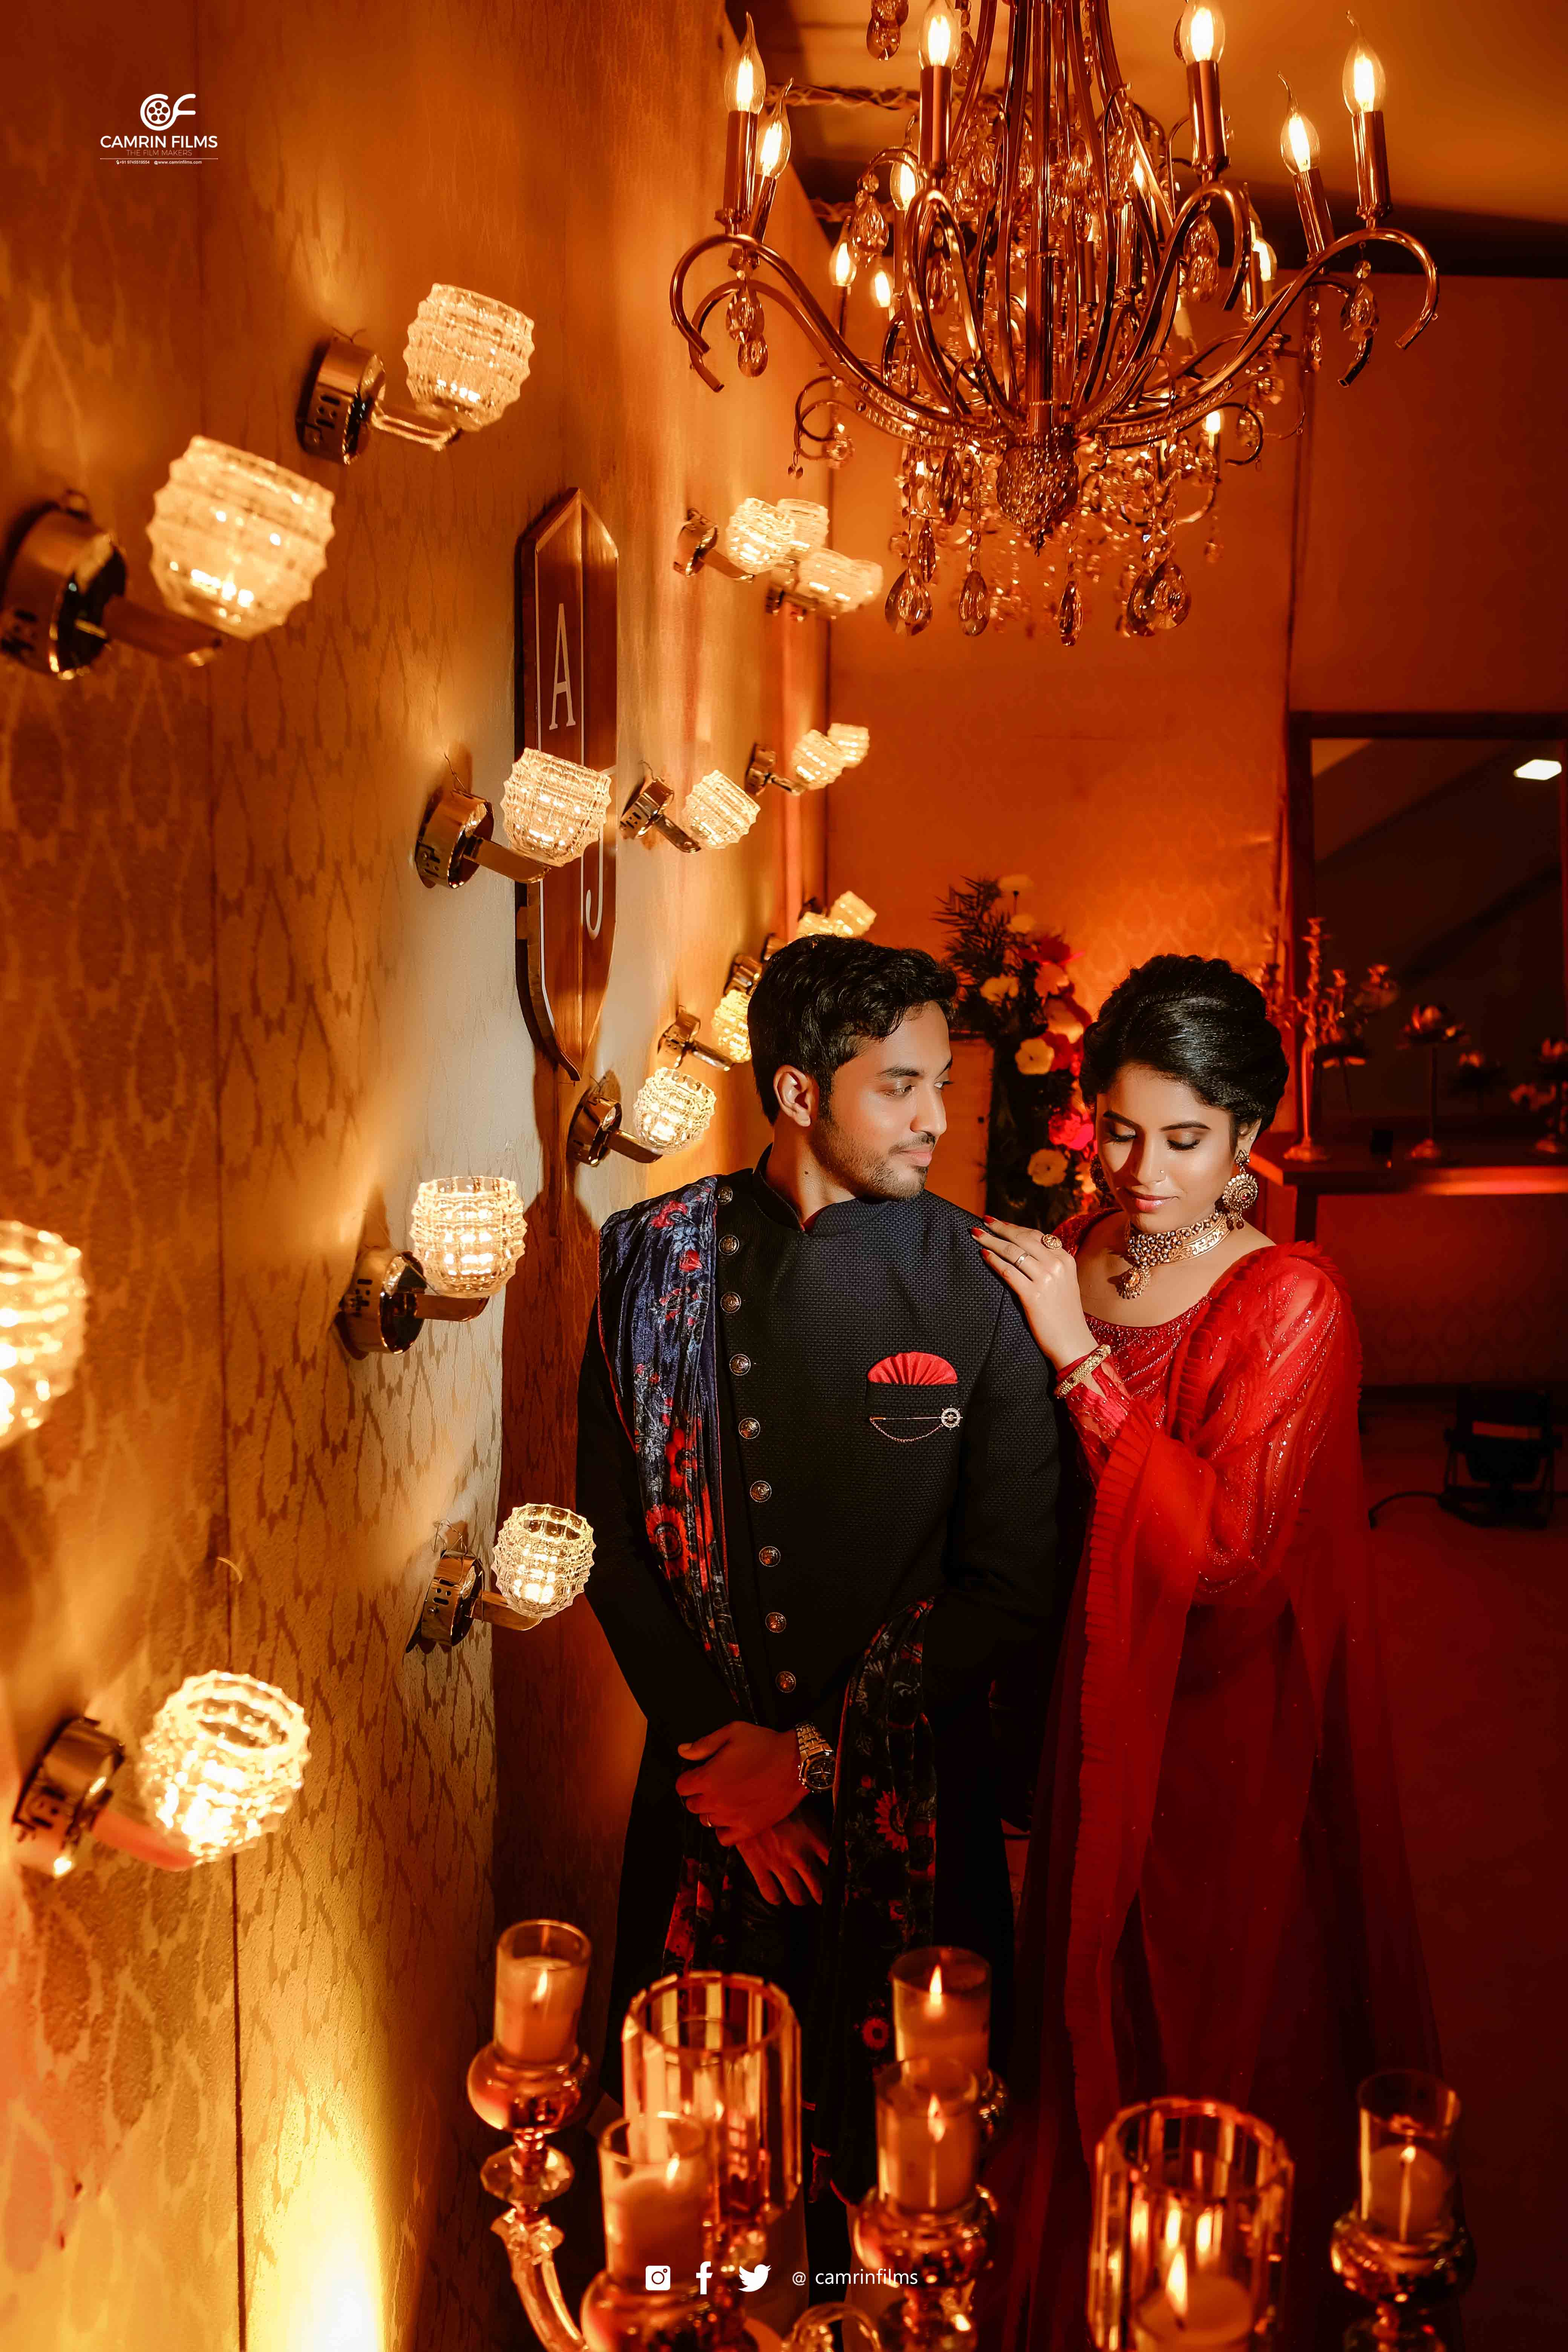 #weddingphotography #engagement #groom #bride #weddingday #wedding #happiness #dreamwedding #photoshoot #party #ceremony